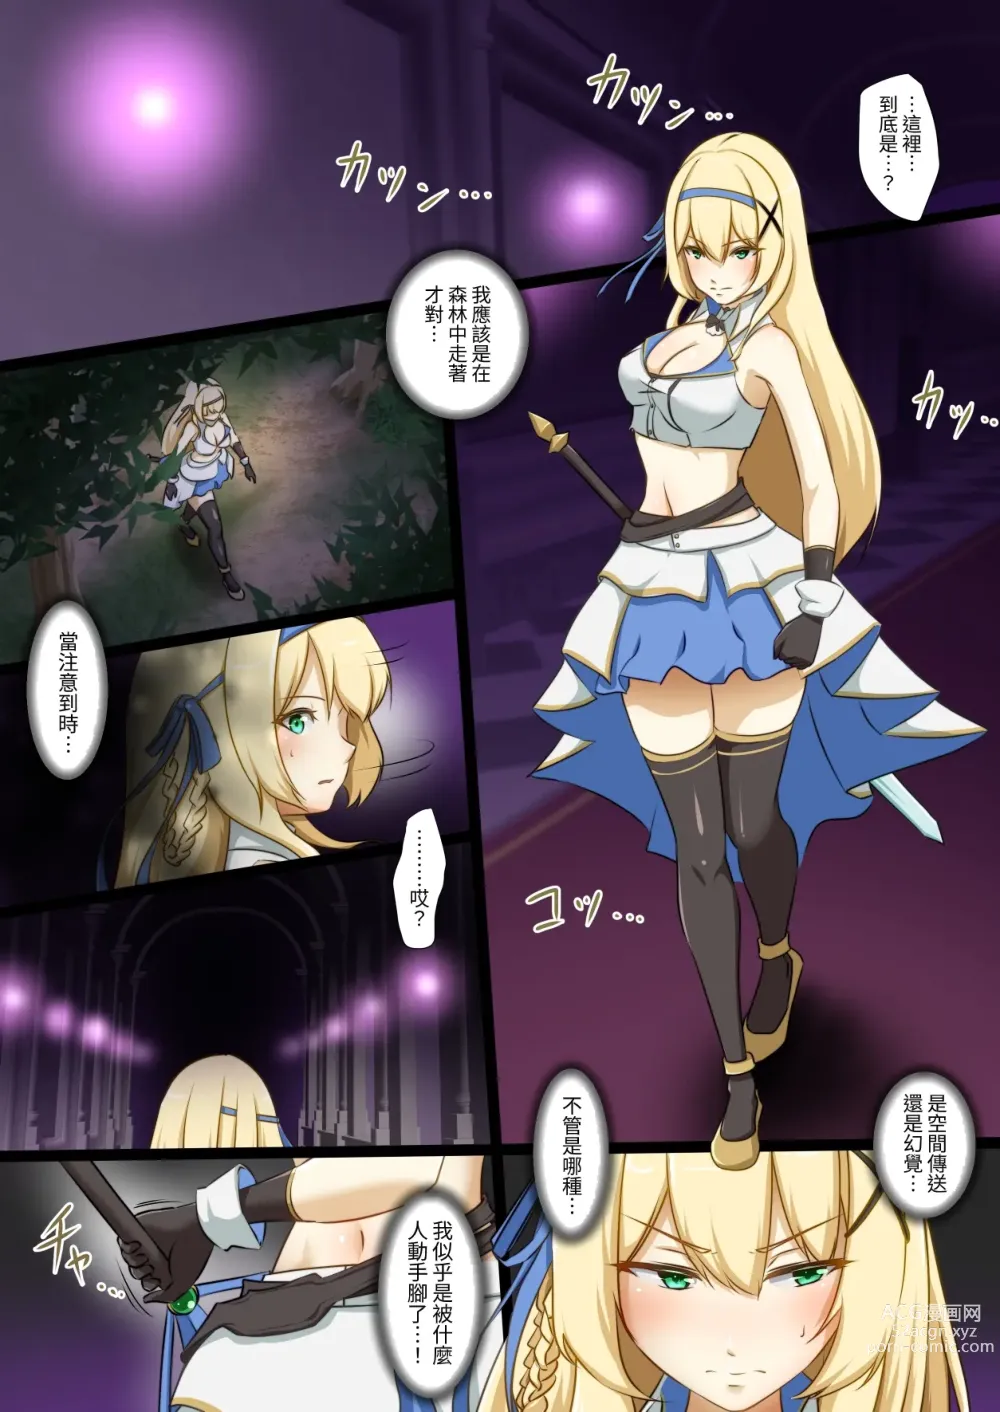 Page 3 of doujinshi 公主骑士与色色敌人战斗并败北的故事